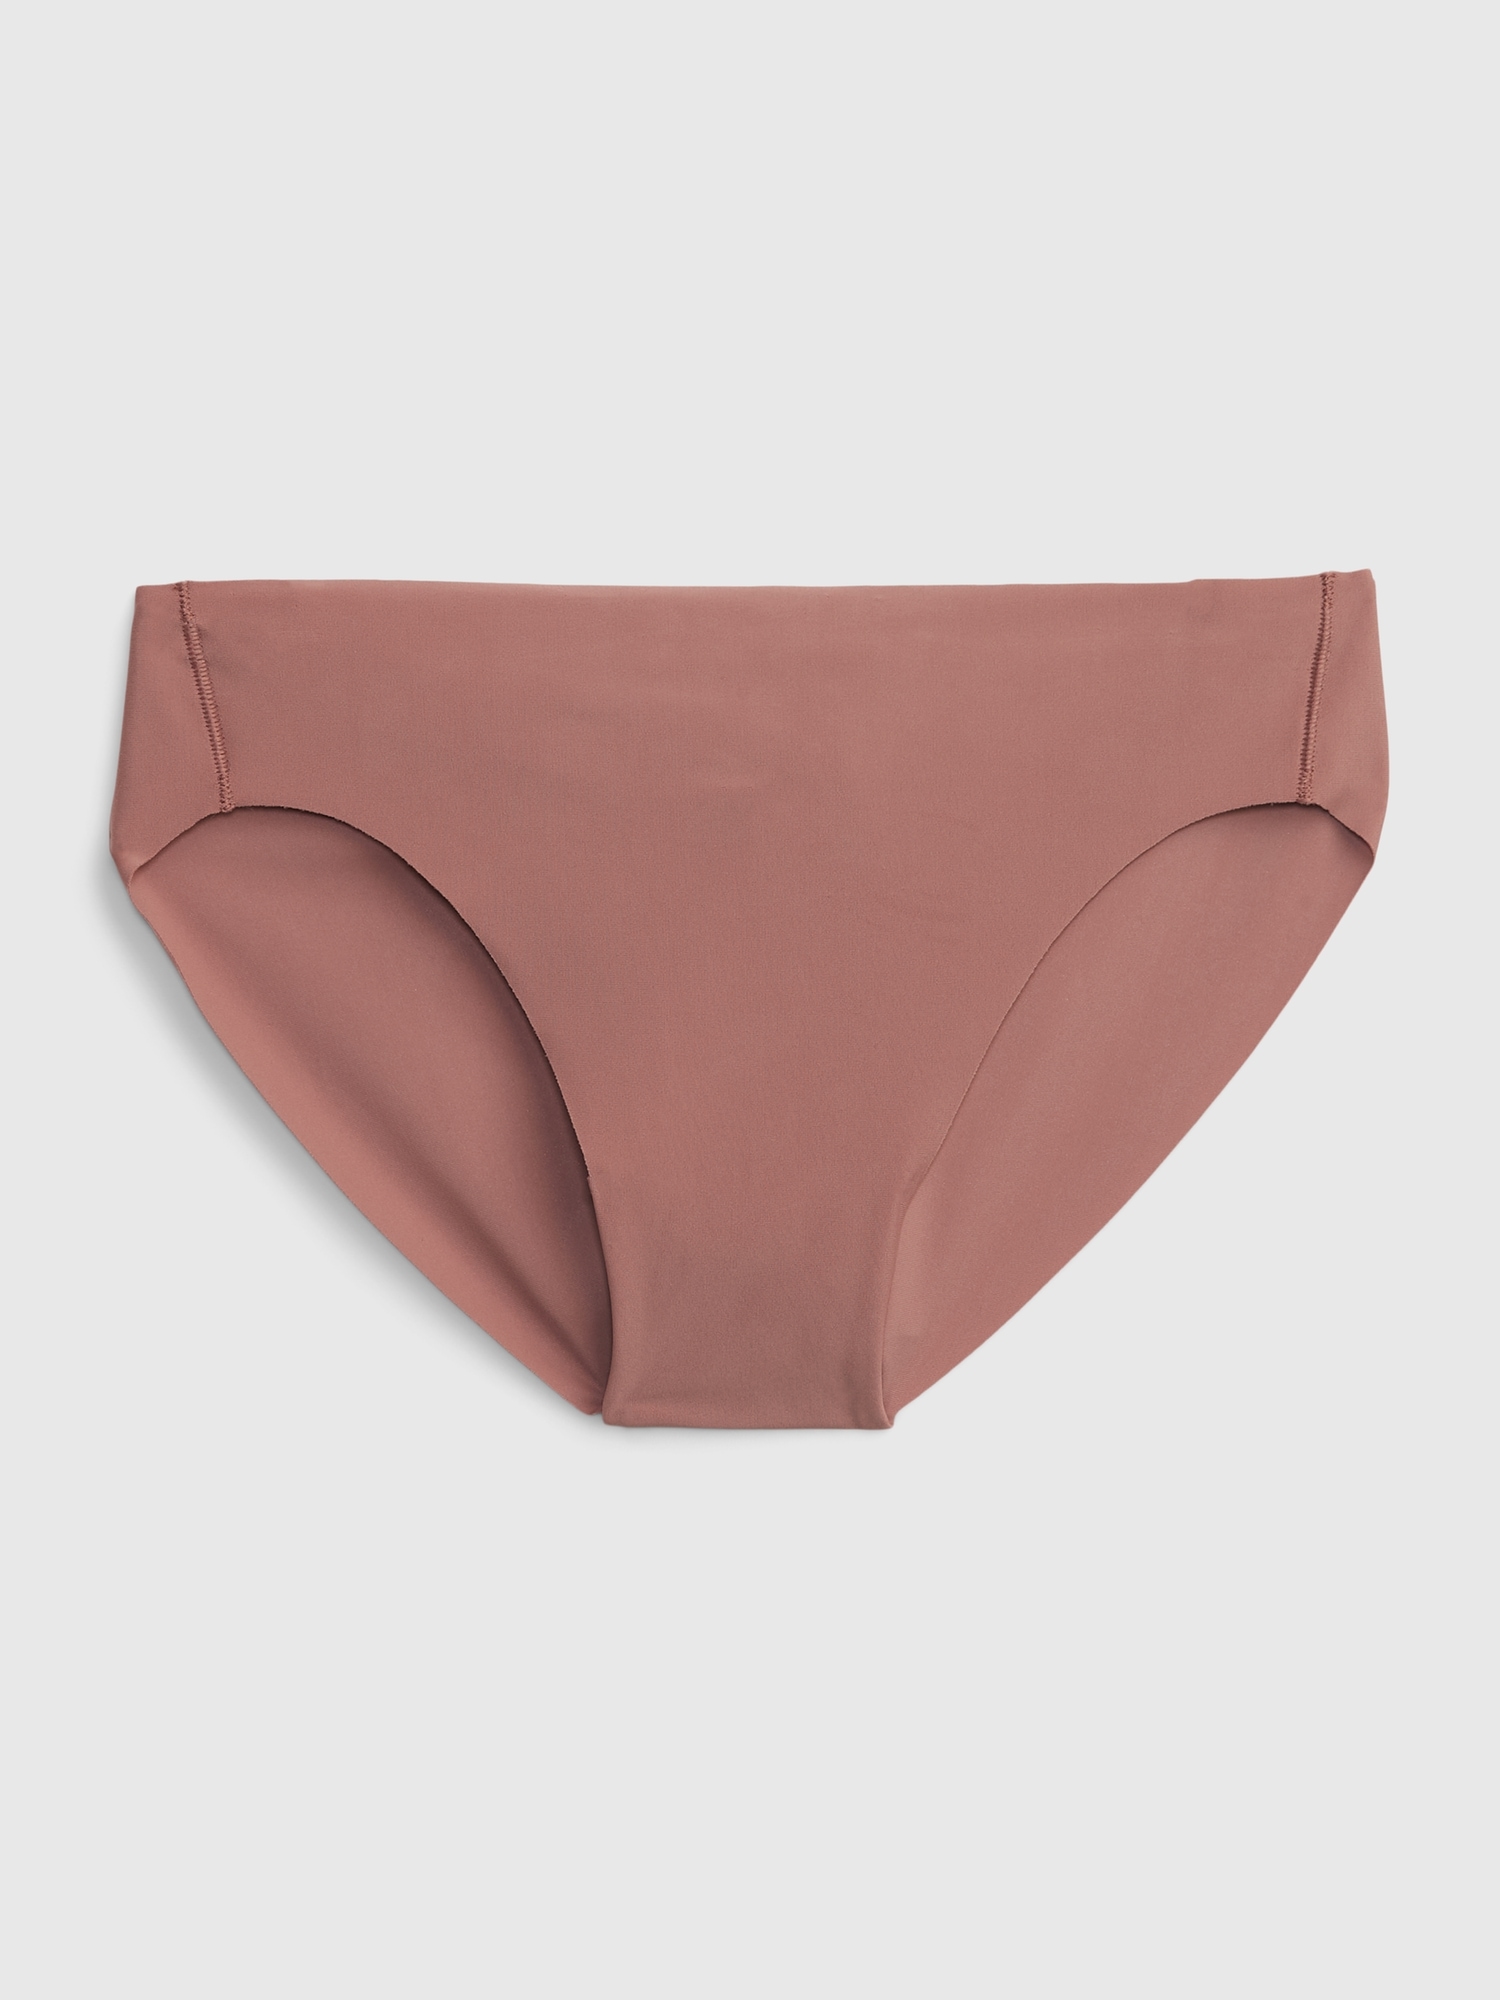 Pink Crinkle - Thong Panties - Small